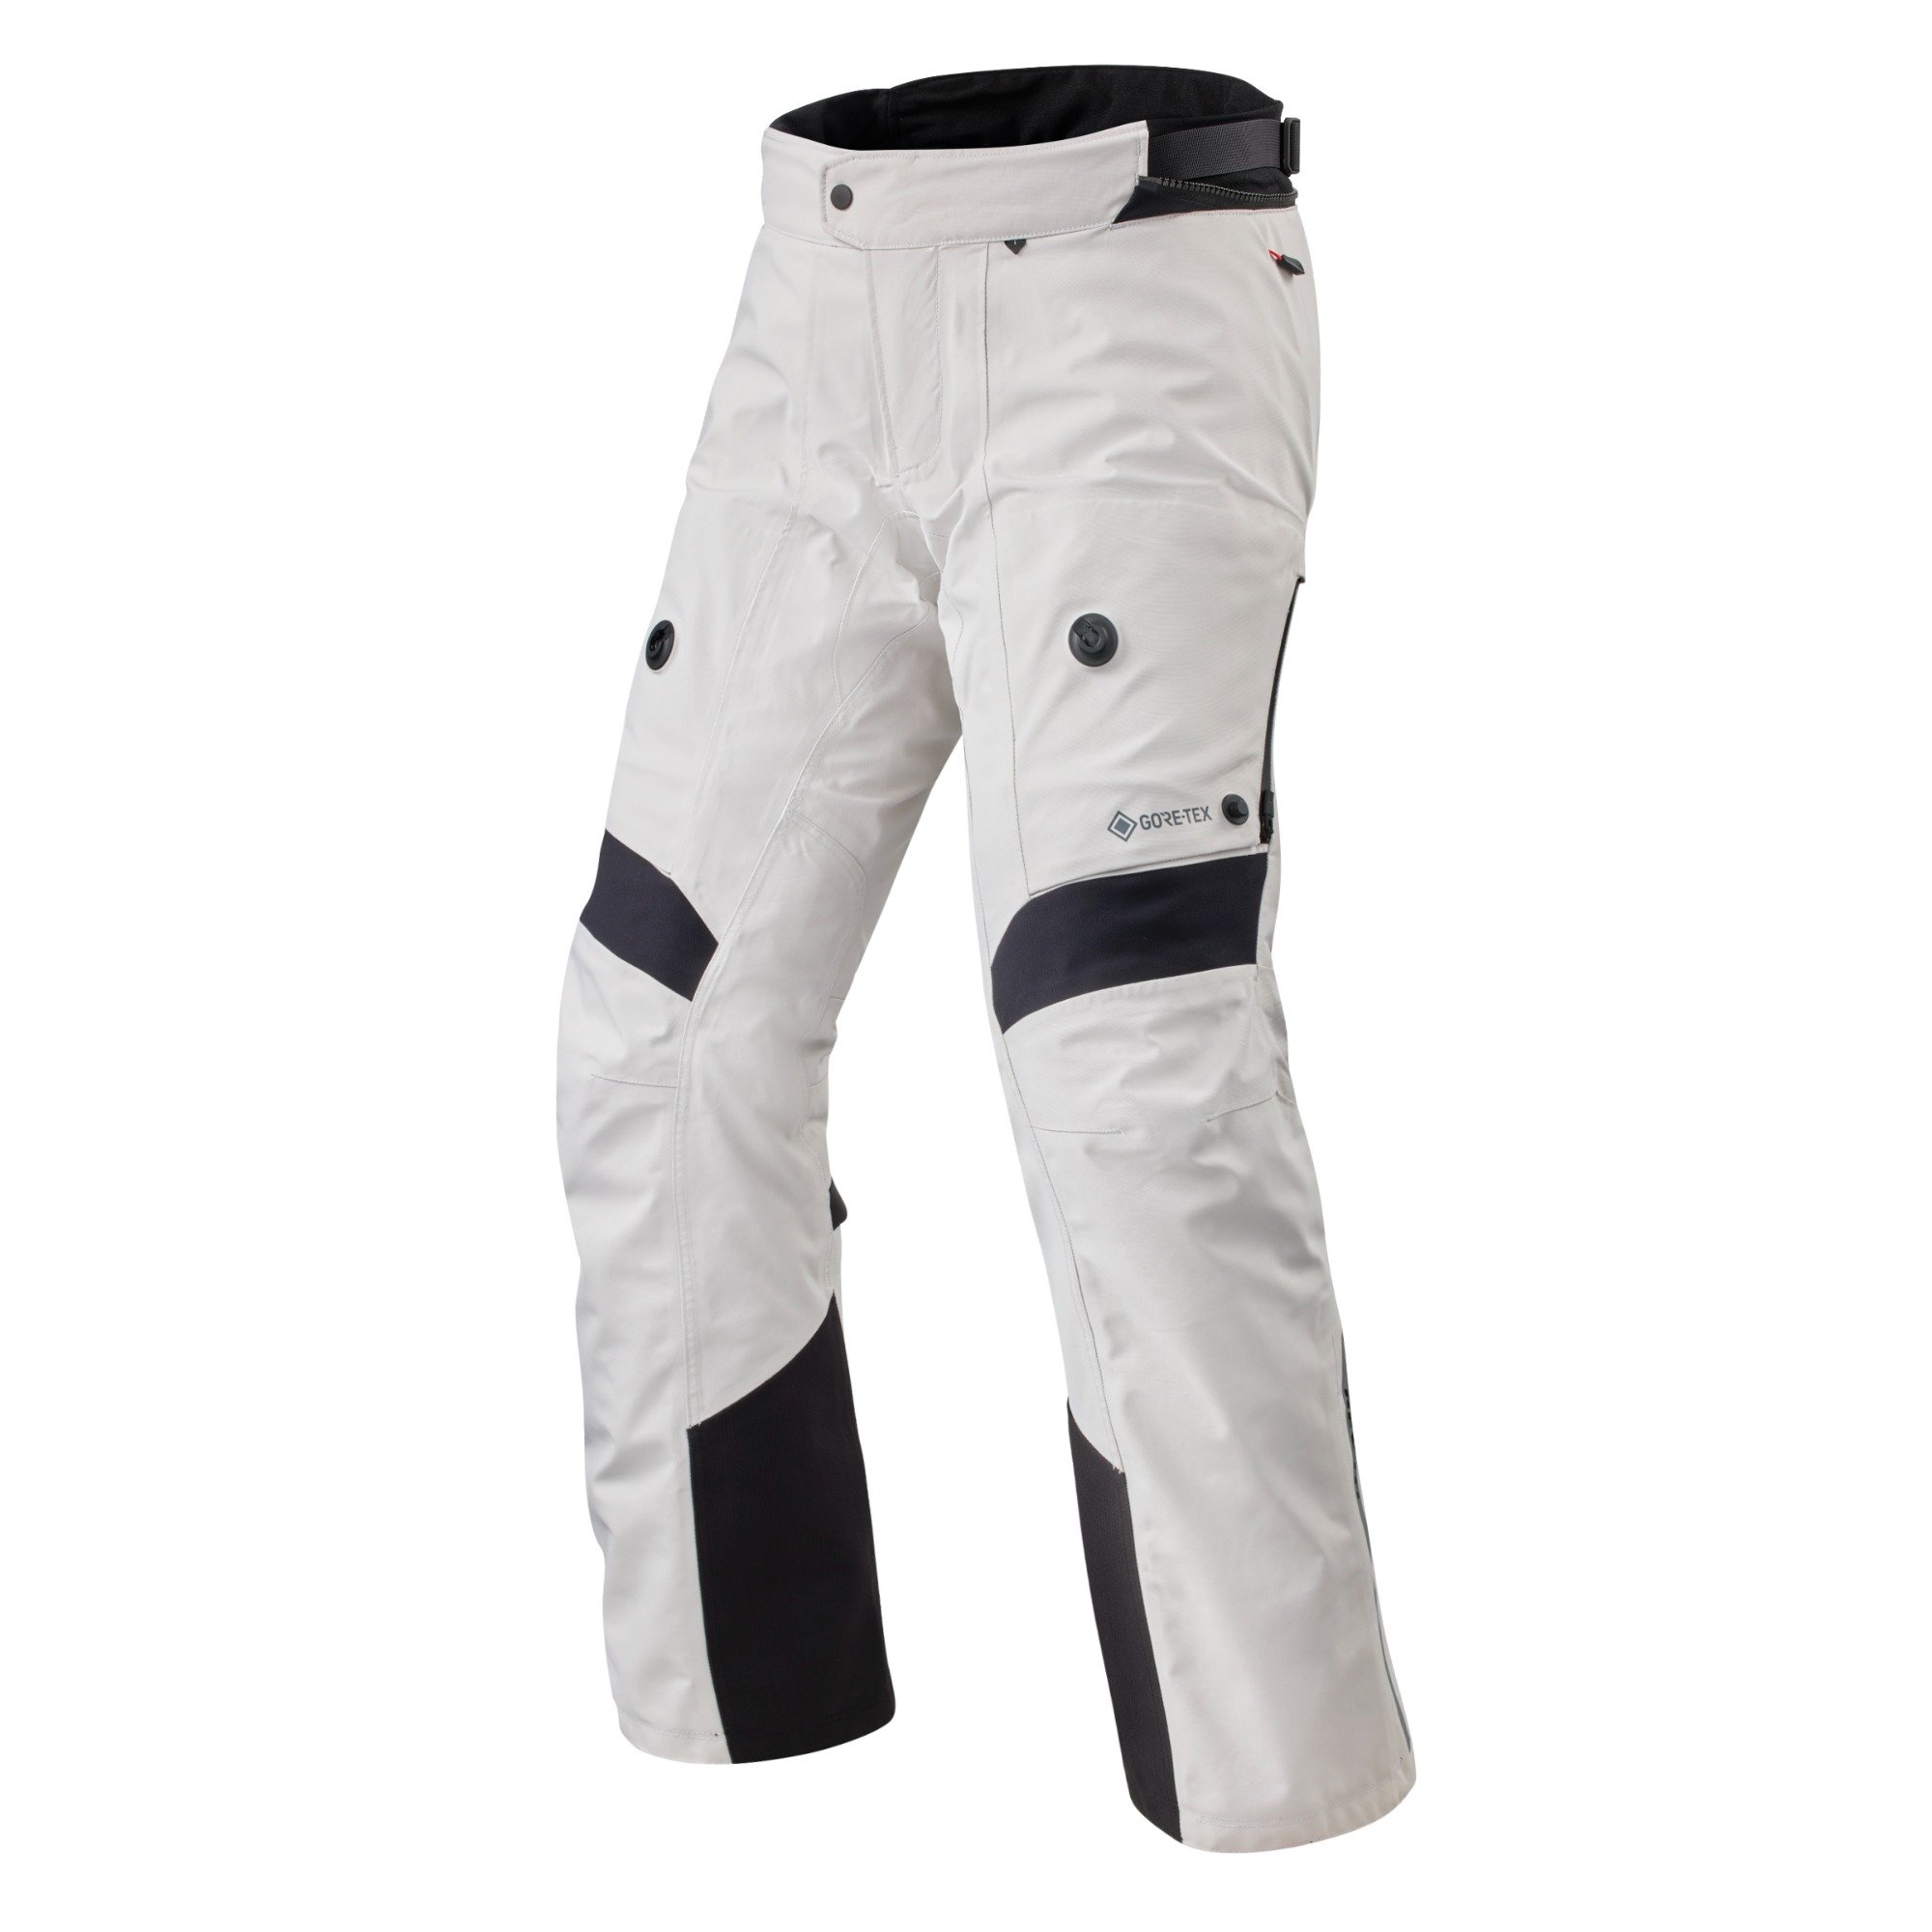 Image of REV'IT! Pants Poseidon 3 GTX Silver Black Long Motorcycle Pants Size XL ID 8700001362702